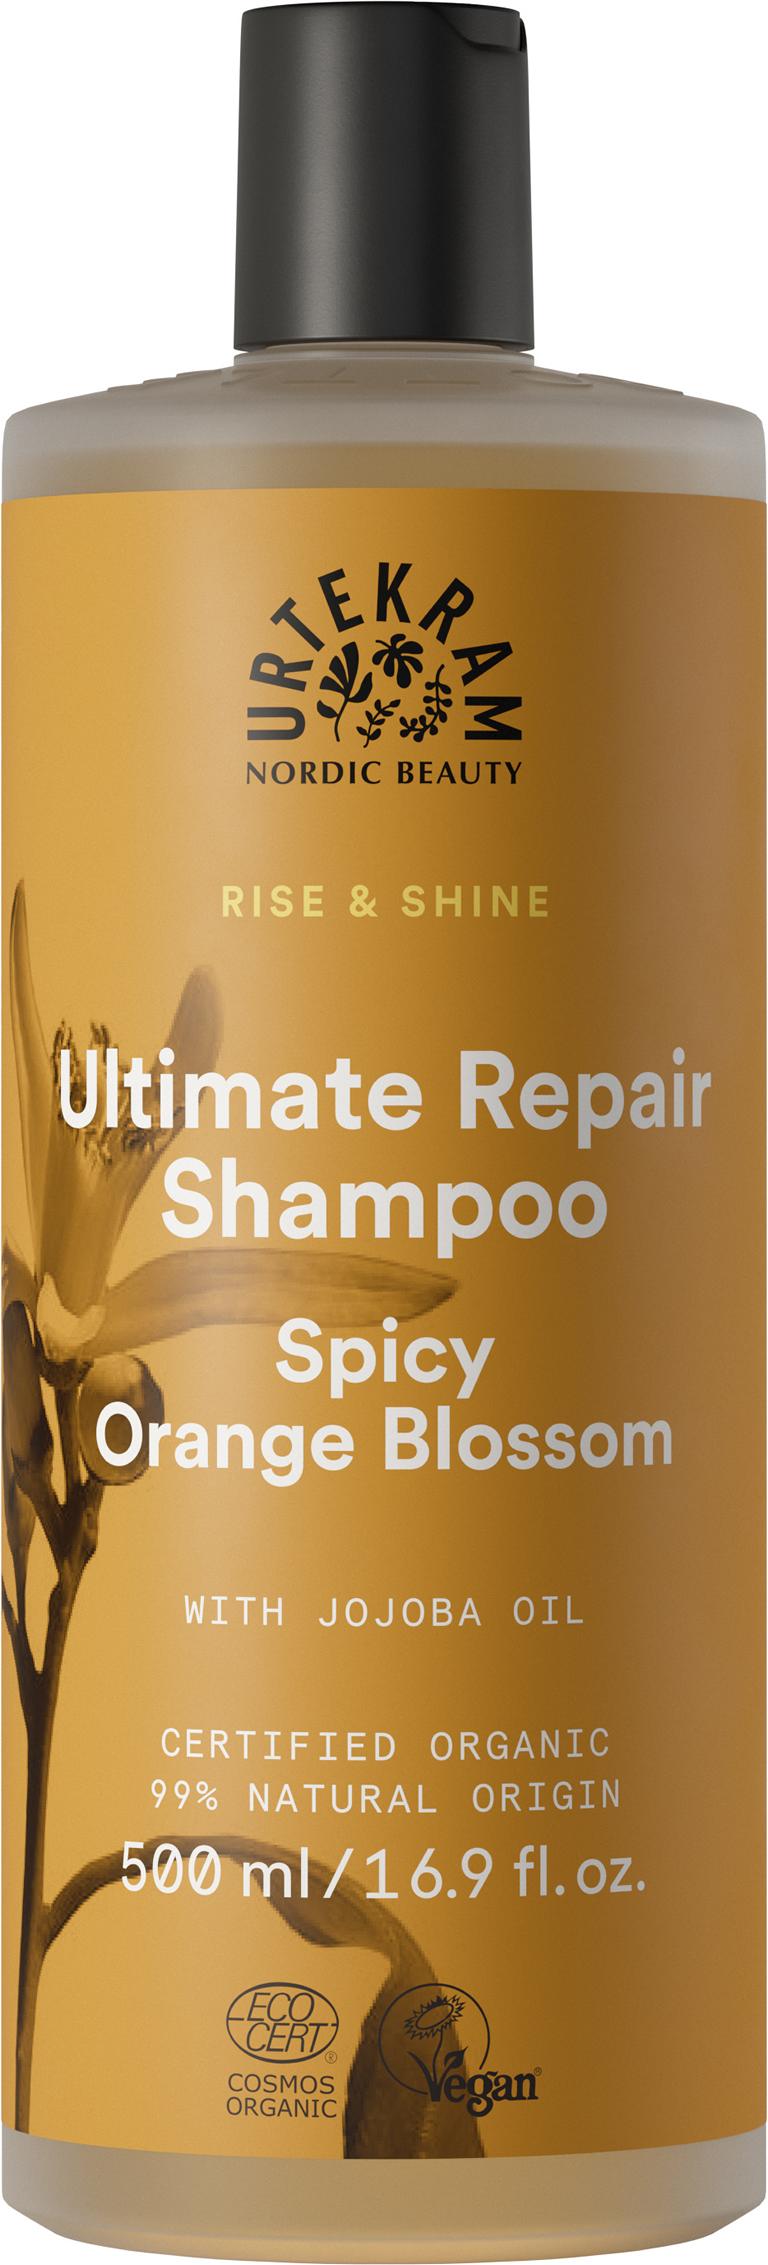 Urtekram Spicy Orange Blossom Shampoo 500m